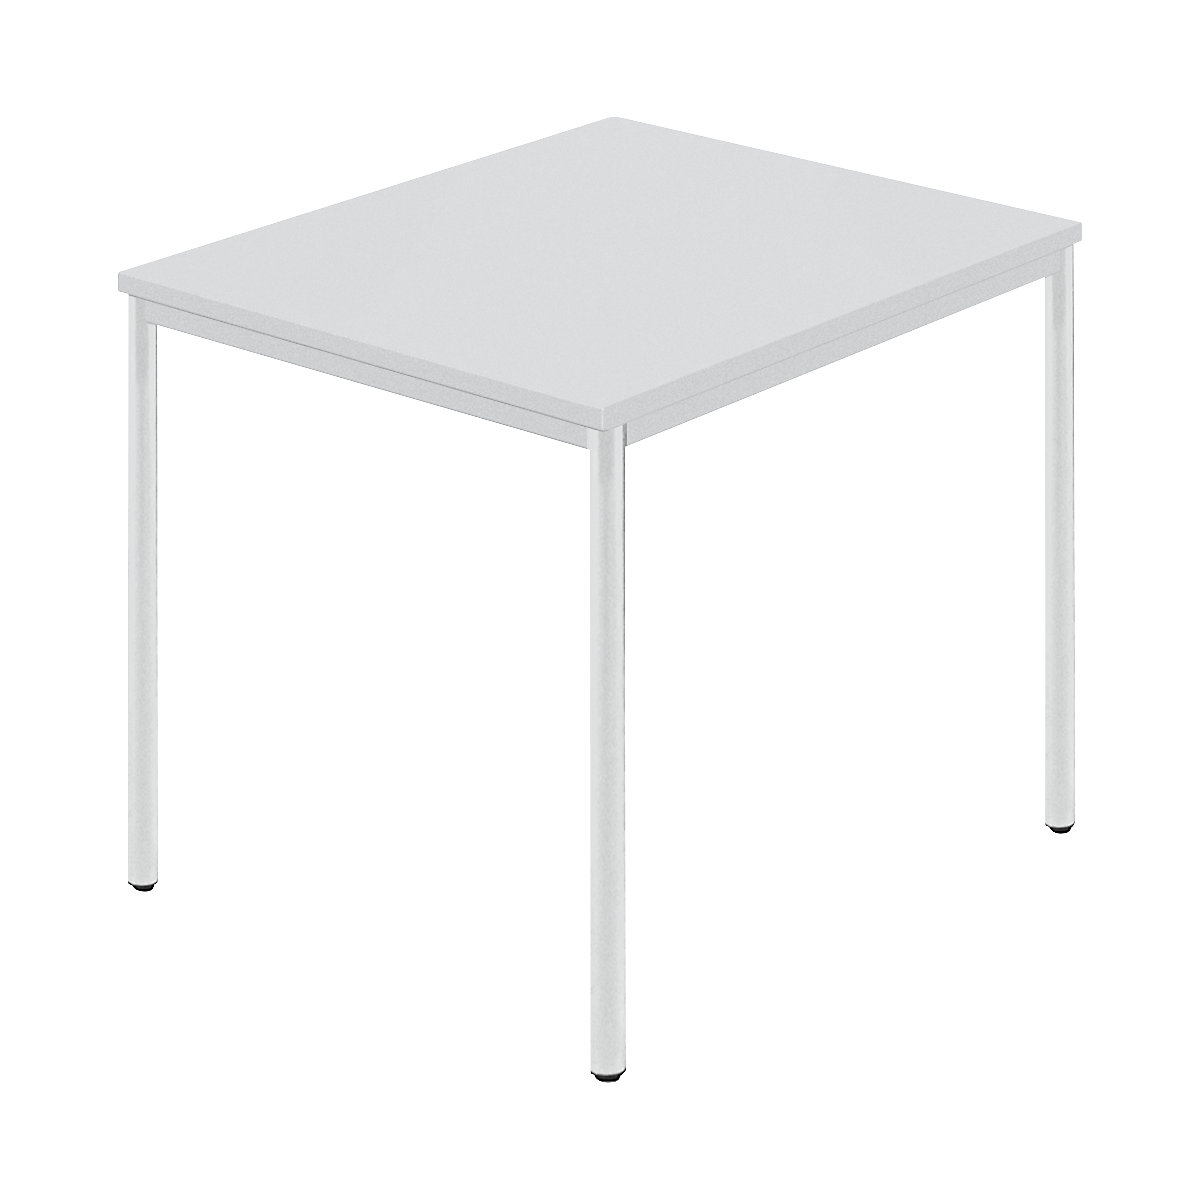 Rectangular table, coated round tubing, WxD 800 x 800 mm, grey / grey-6